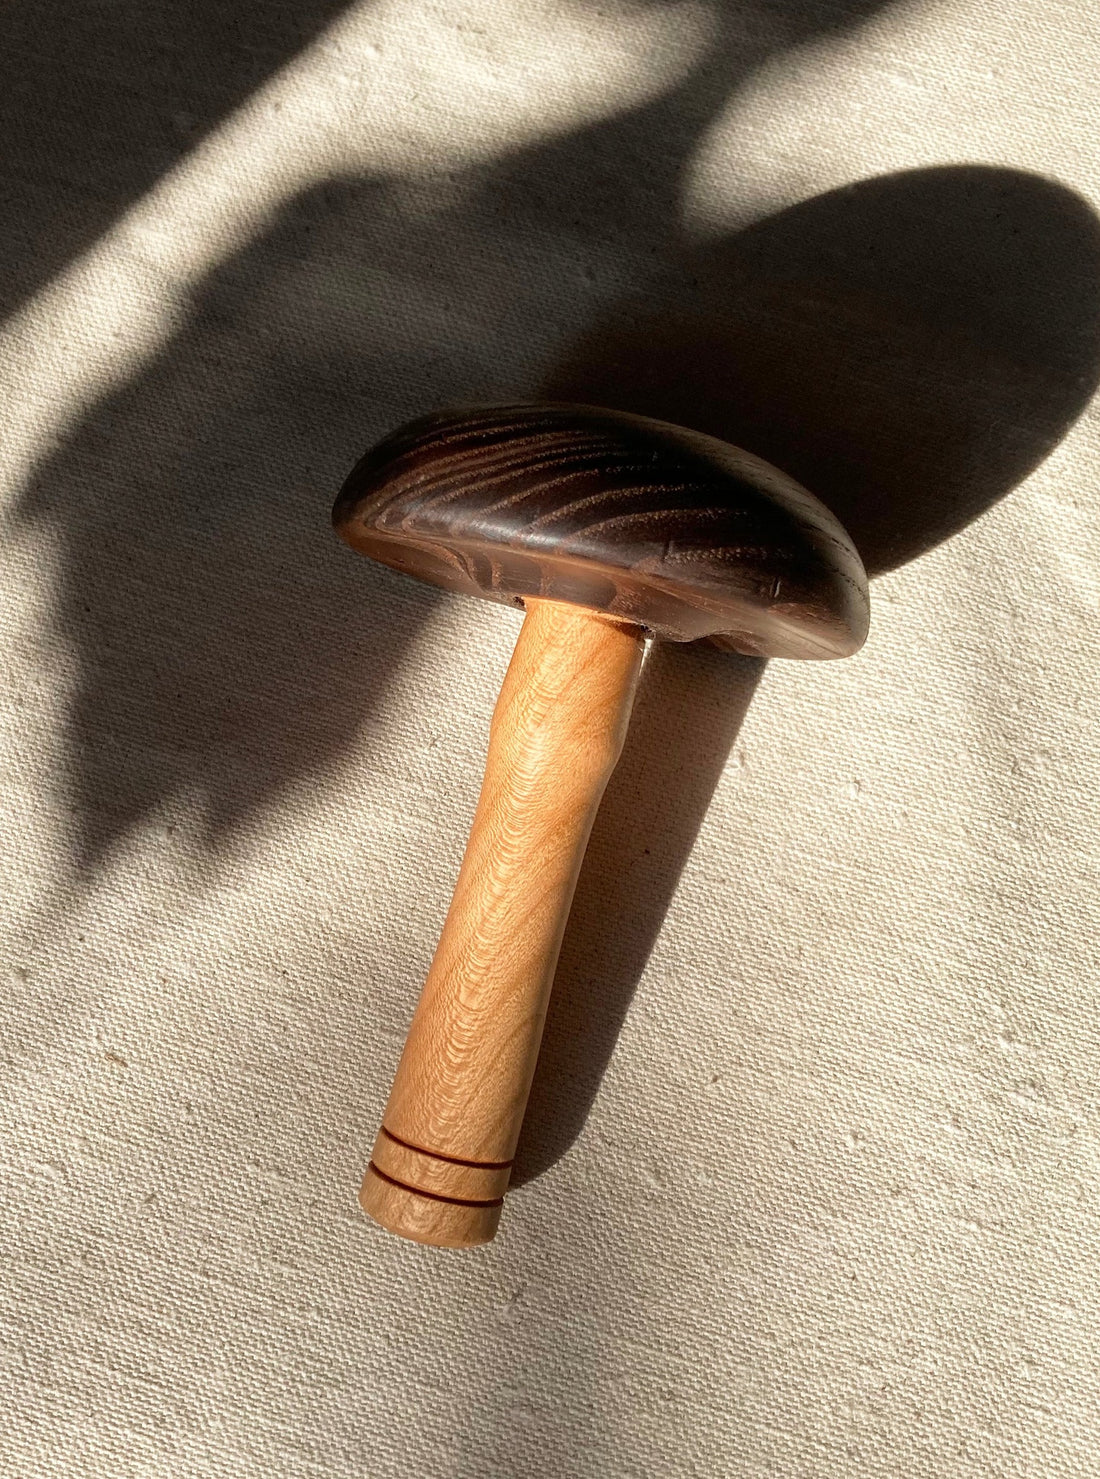 Darning mushroom with threaded handle by Moosehill